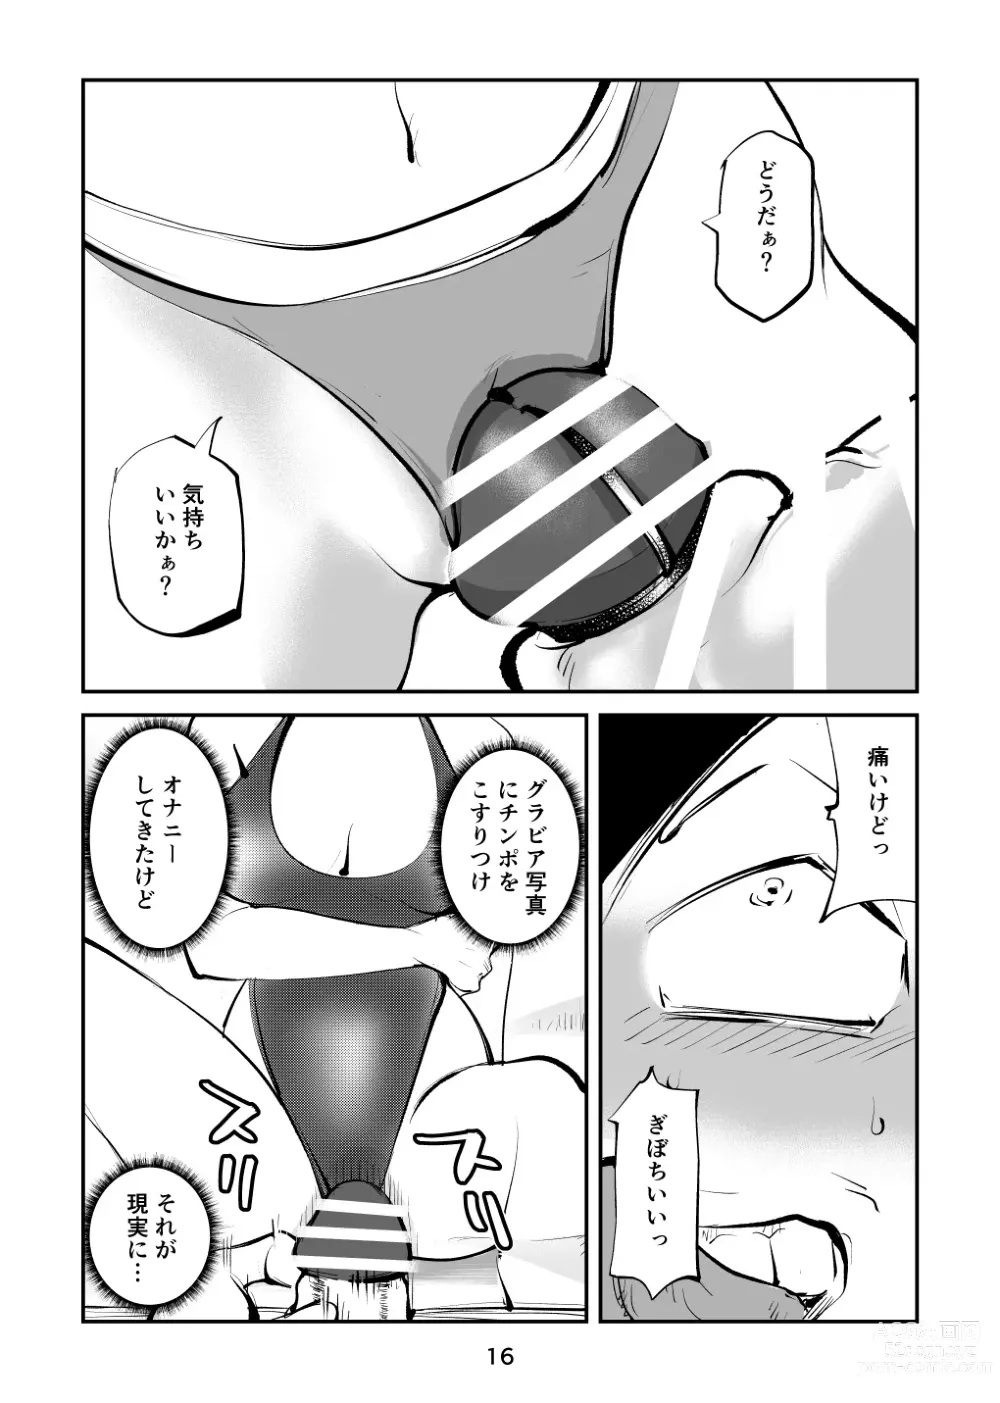 Page 16 of doujinshi Maso Boko Kickboxing 2